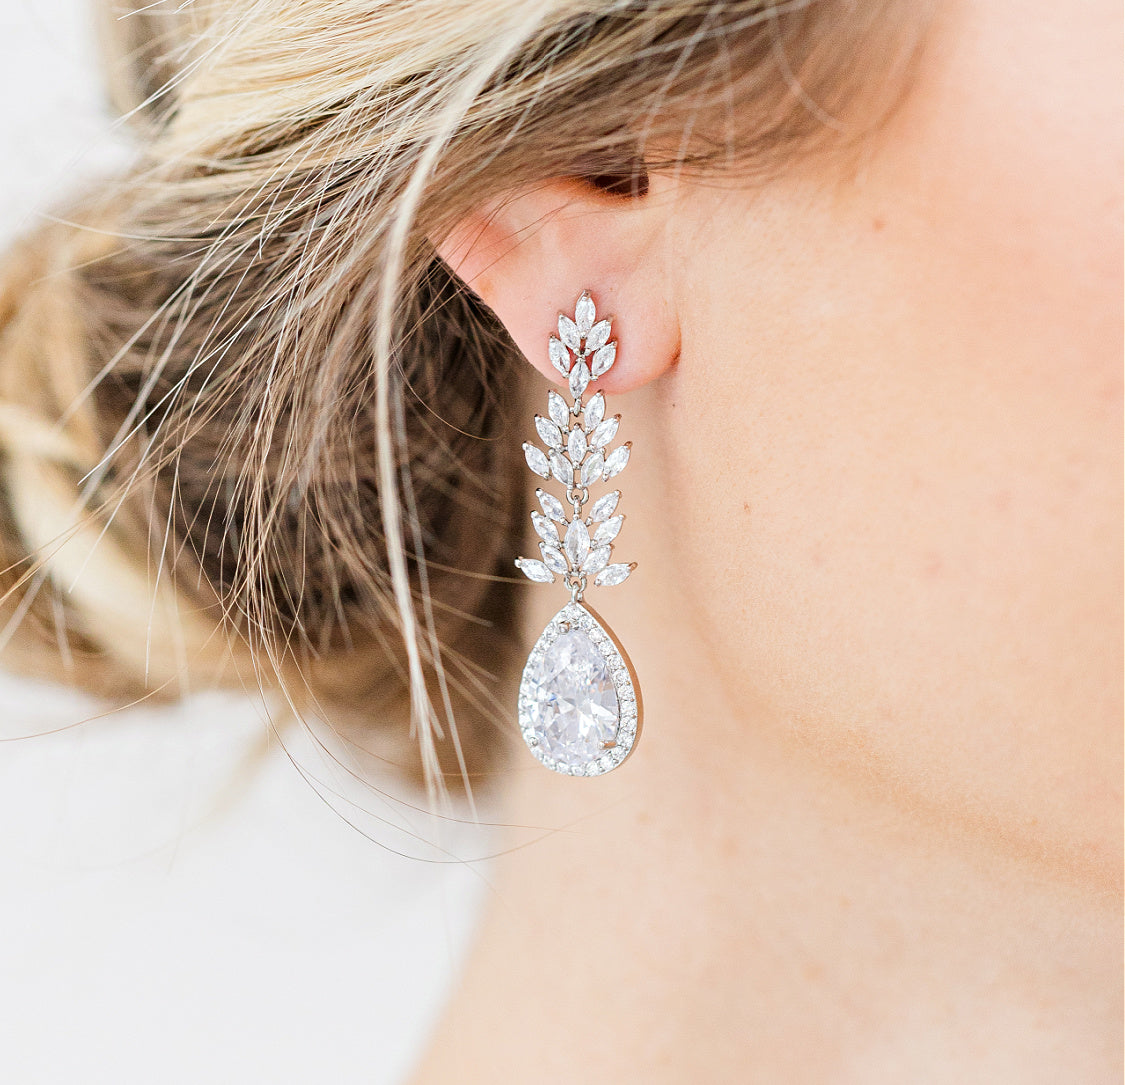 Load image into Gallery viewer, crystal wedding earrings
